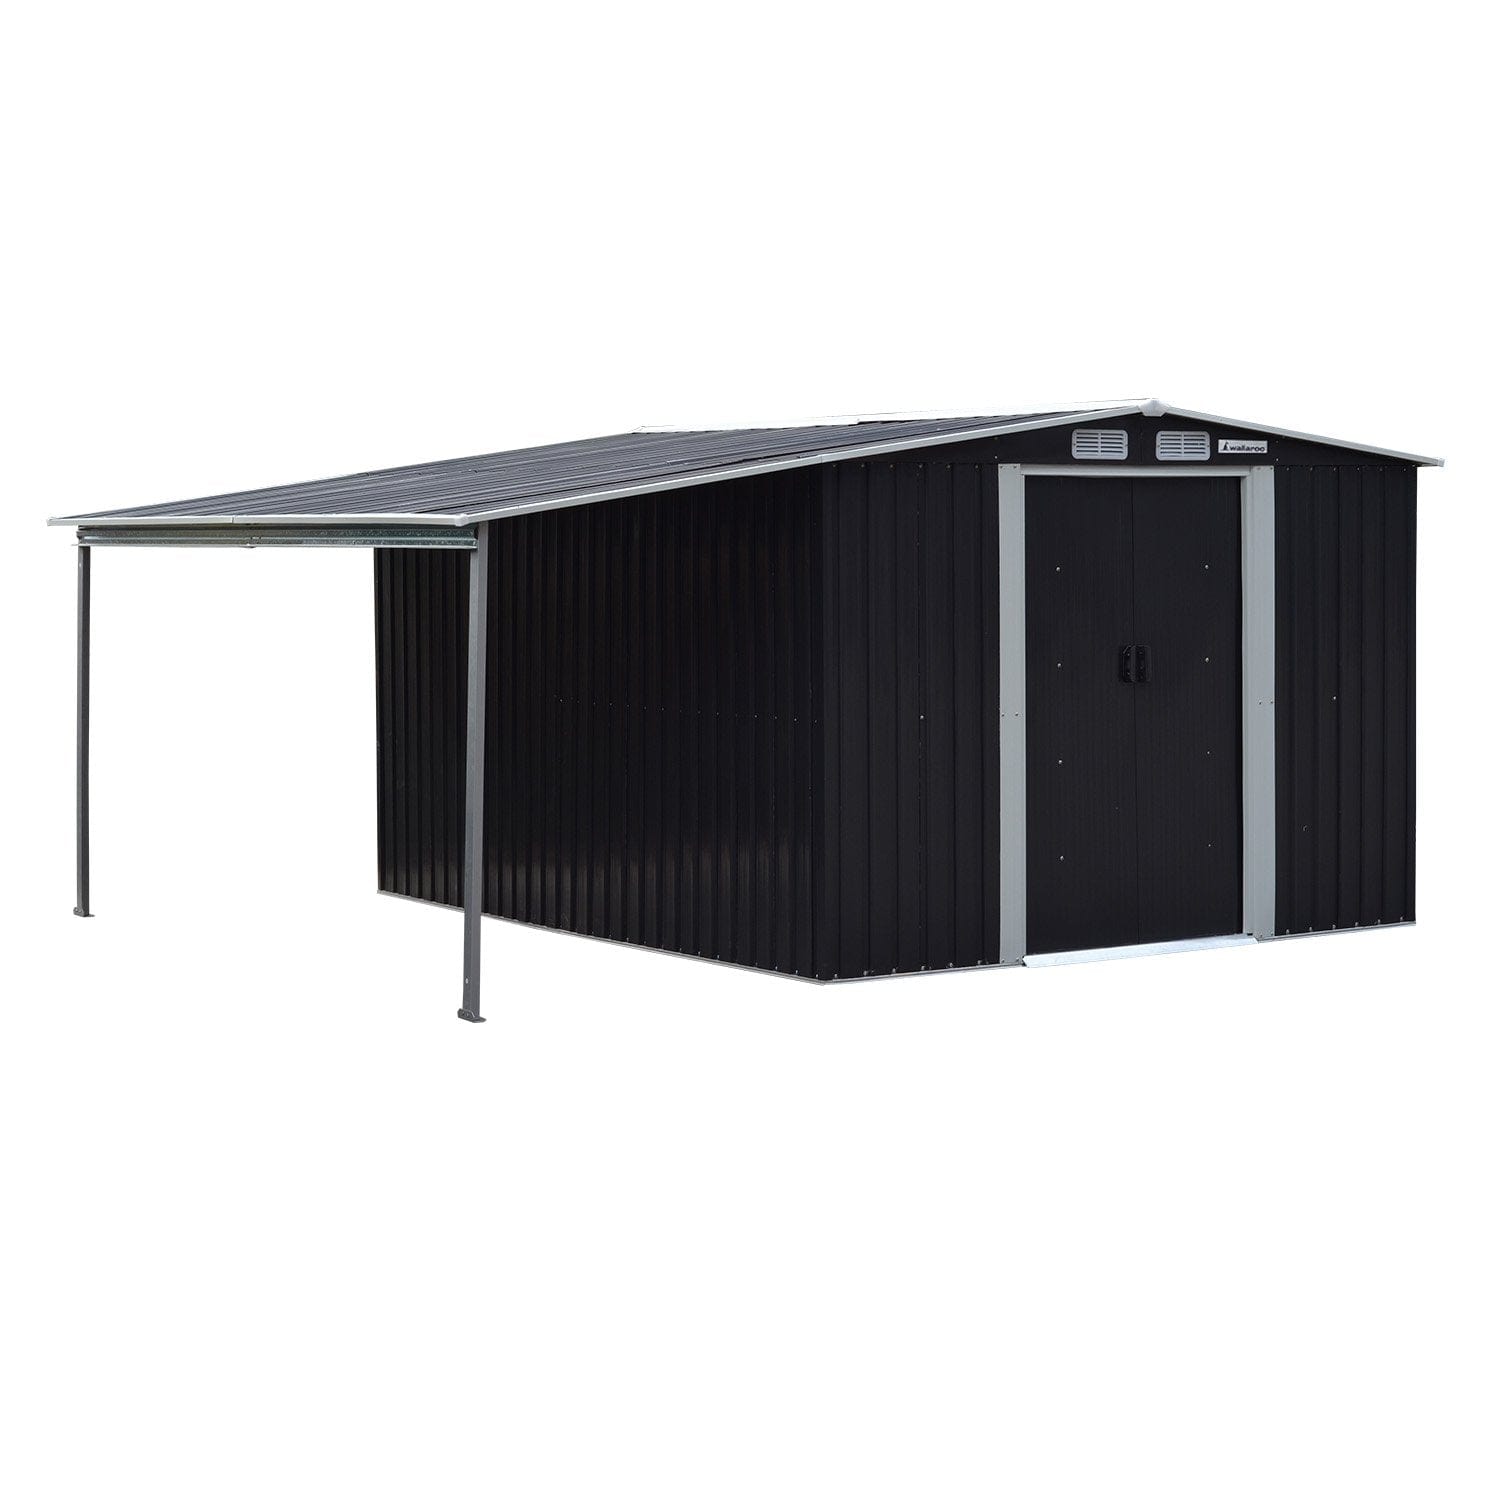 6x8ft Zinc Steel Garden Shed with Open Storage - Black